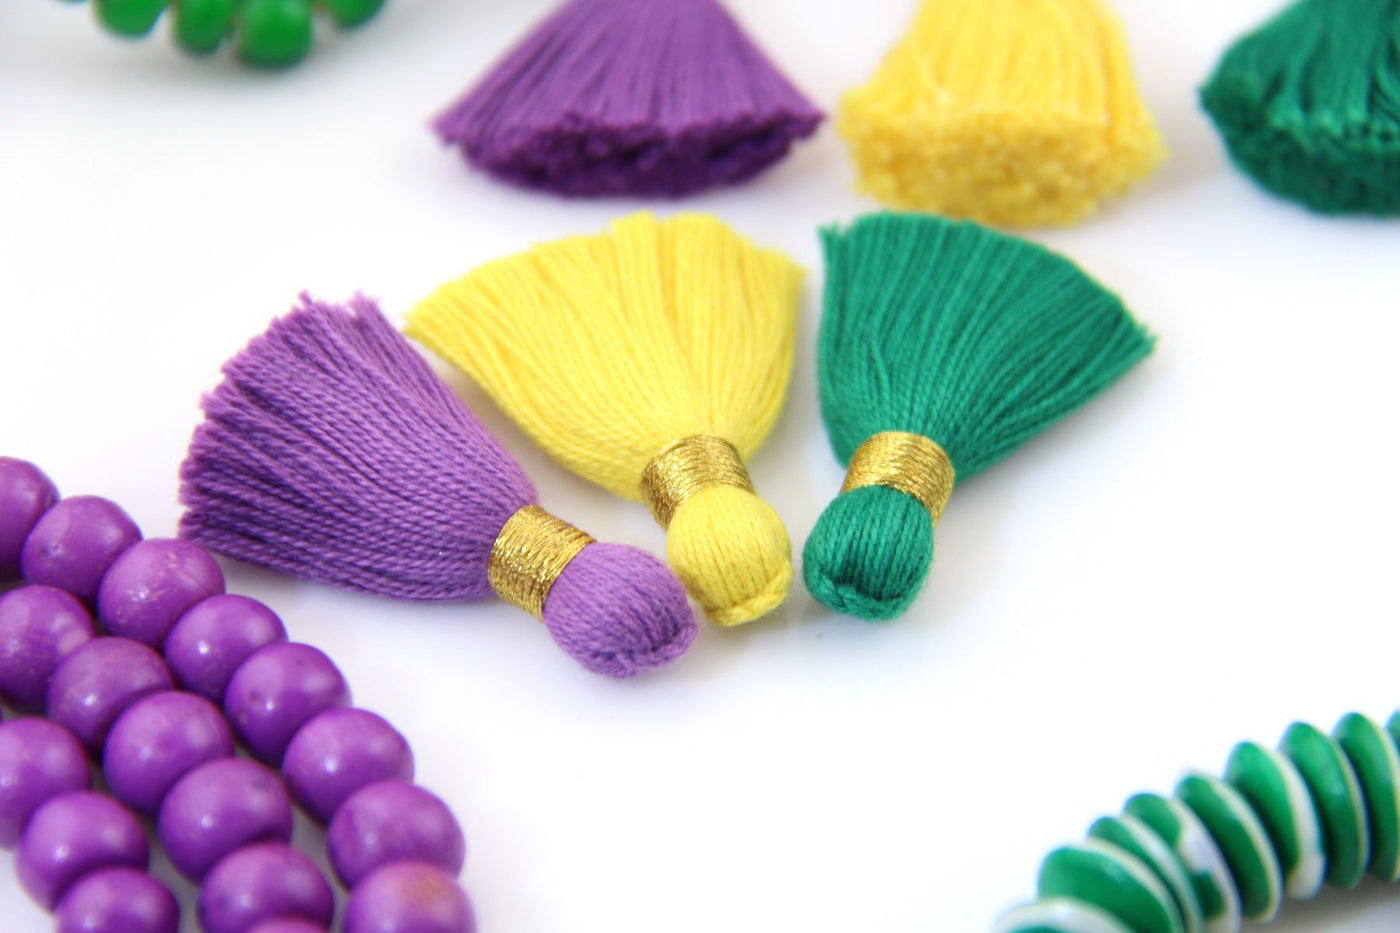 Mardi Gras Mini Tassels: 1.25" Purple, Gold, Green, Fringed Cotton Charms, Jewelry Making Pendants